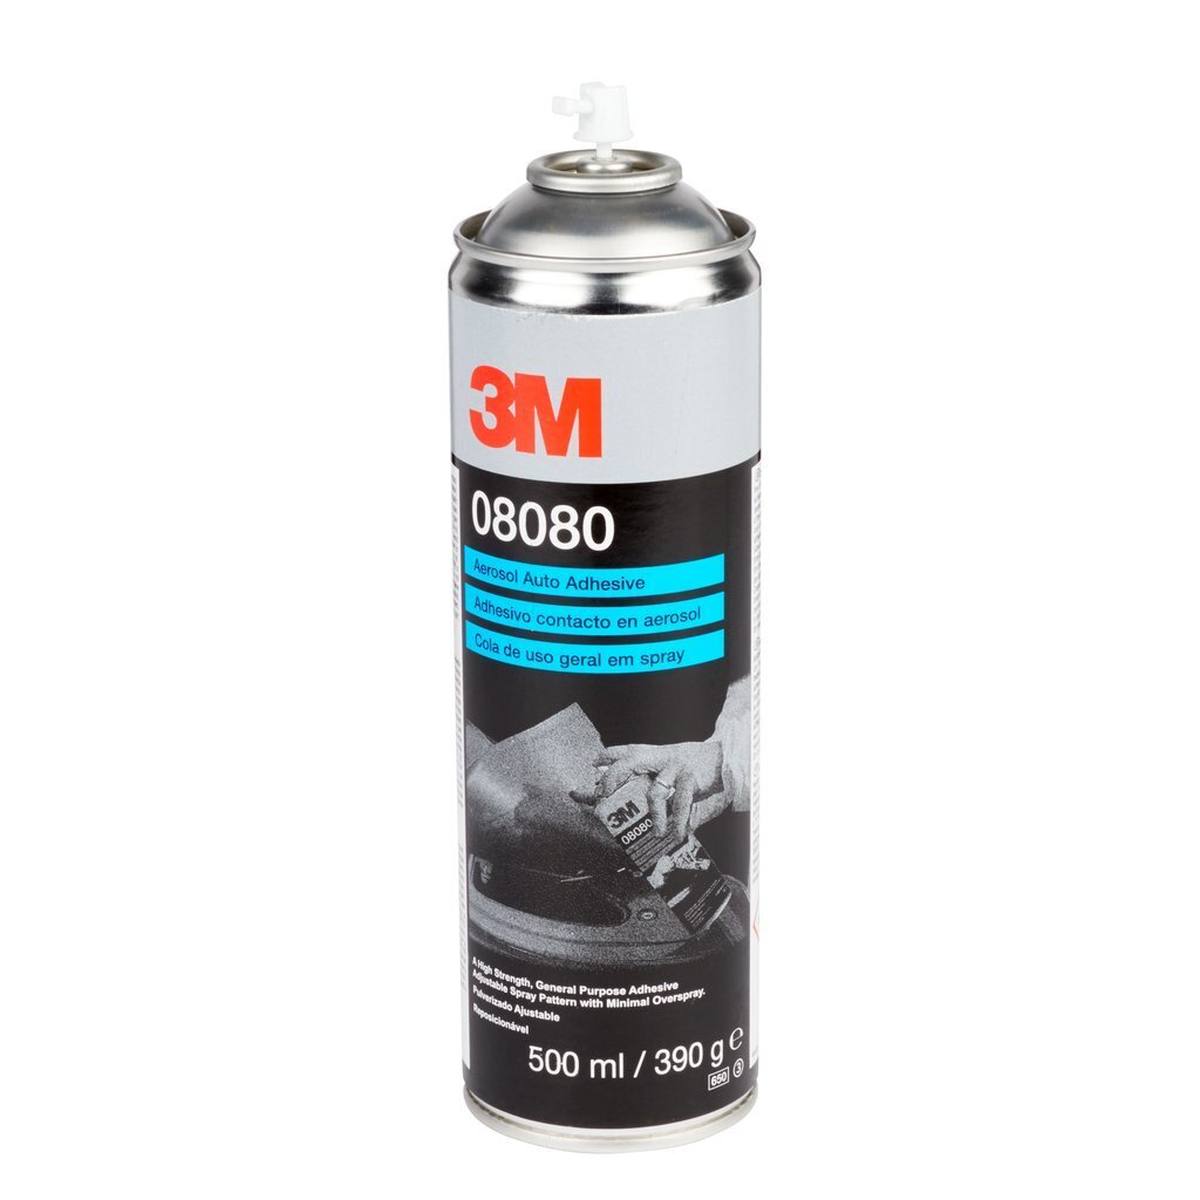 3M Body Adhesive Spray, 500 ml #08080